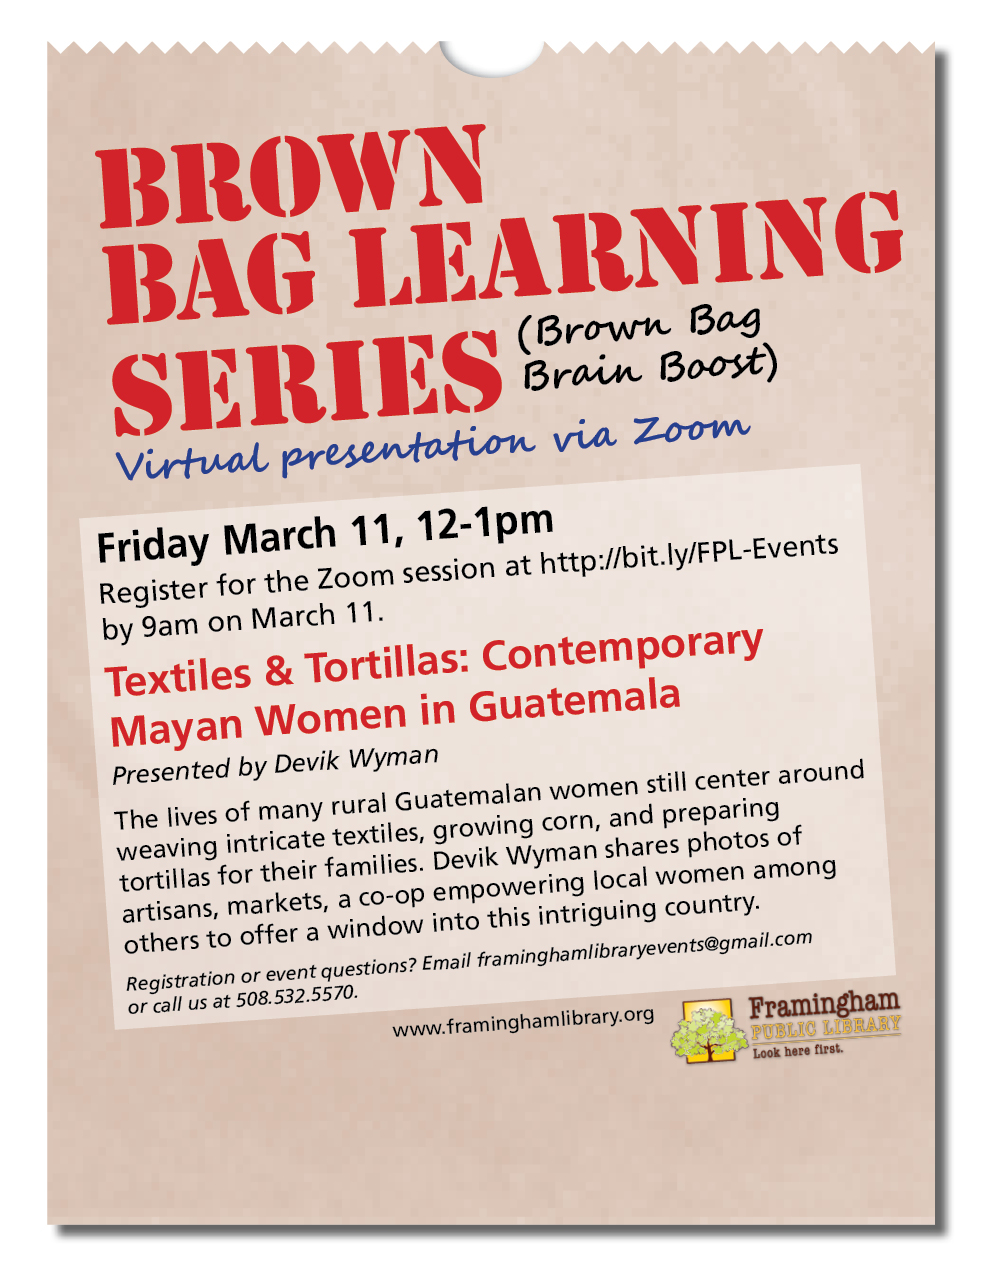 Brown Bag Learning Series: Textiles & Tortillas: Contemporary Mayan Women in Guatemala thumbnail Photo